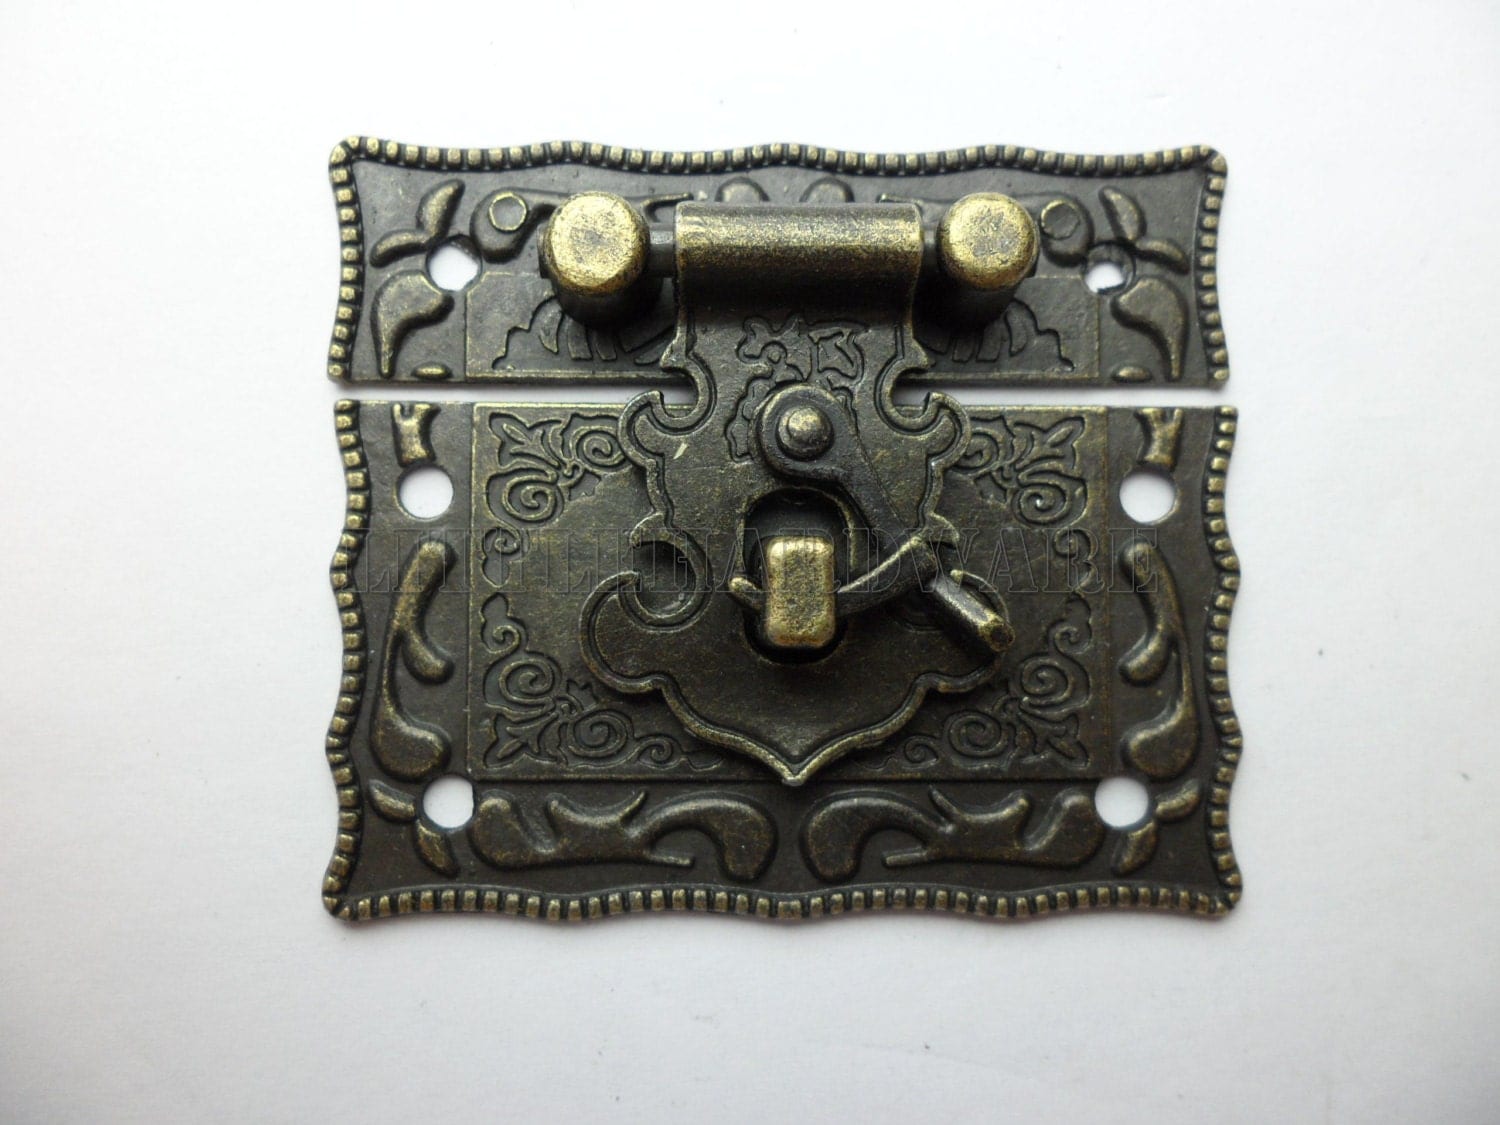 51mmx43mm antique Brass Jewelry Box latch/Hasp by LittleHardware